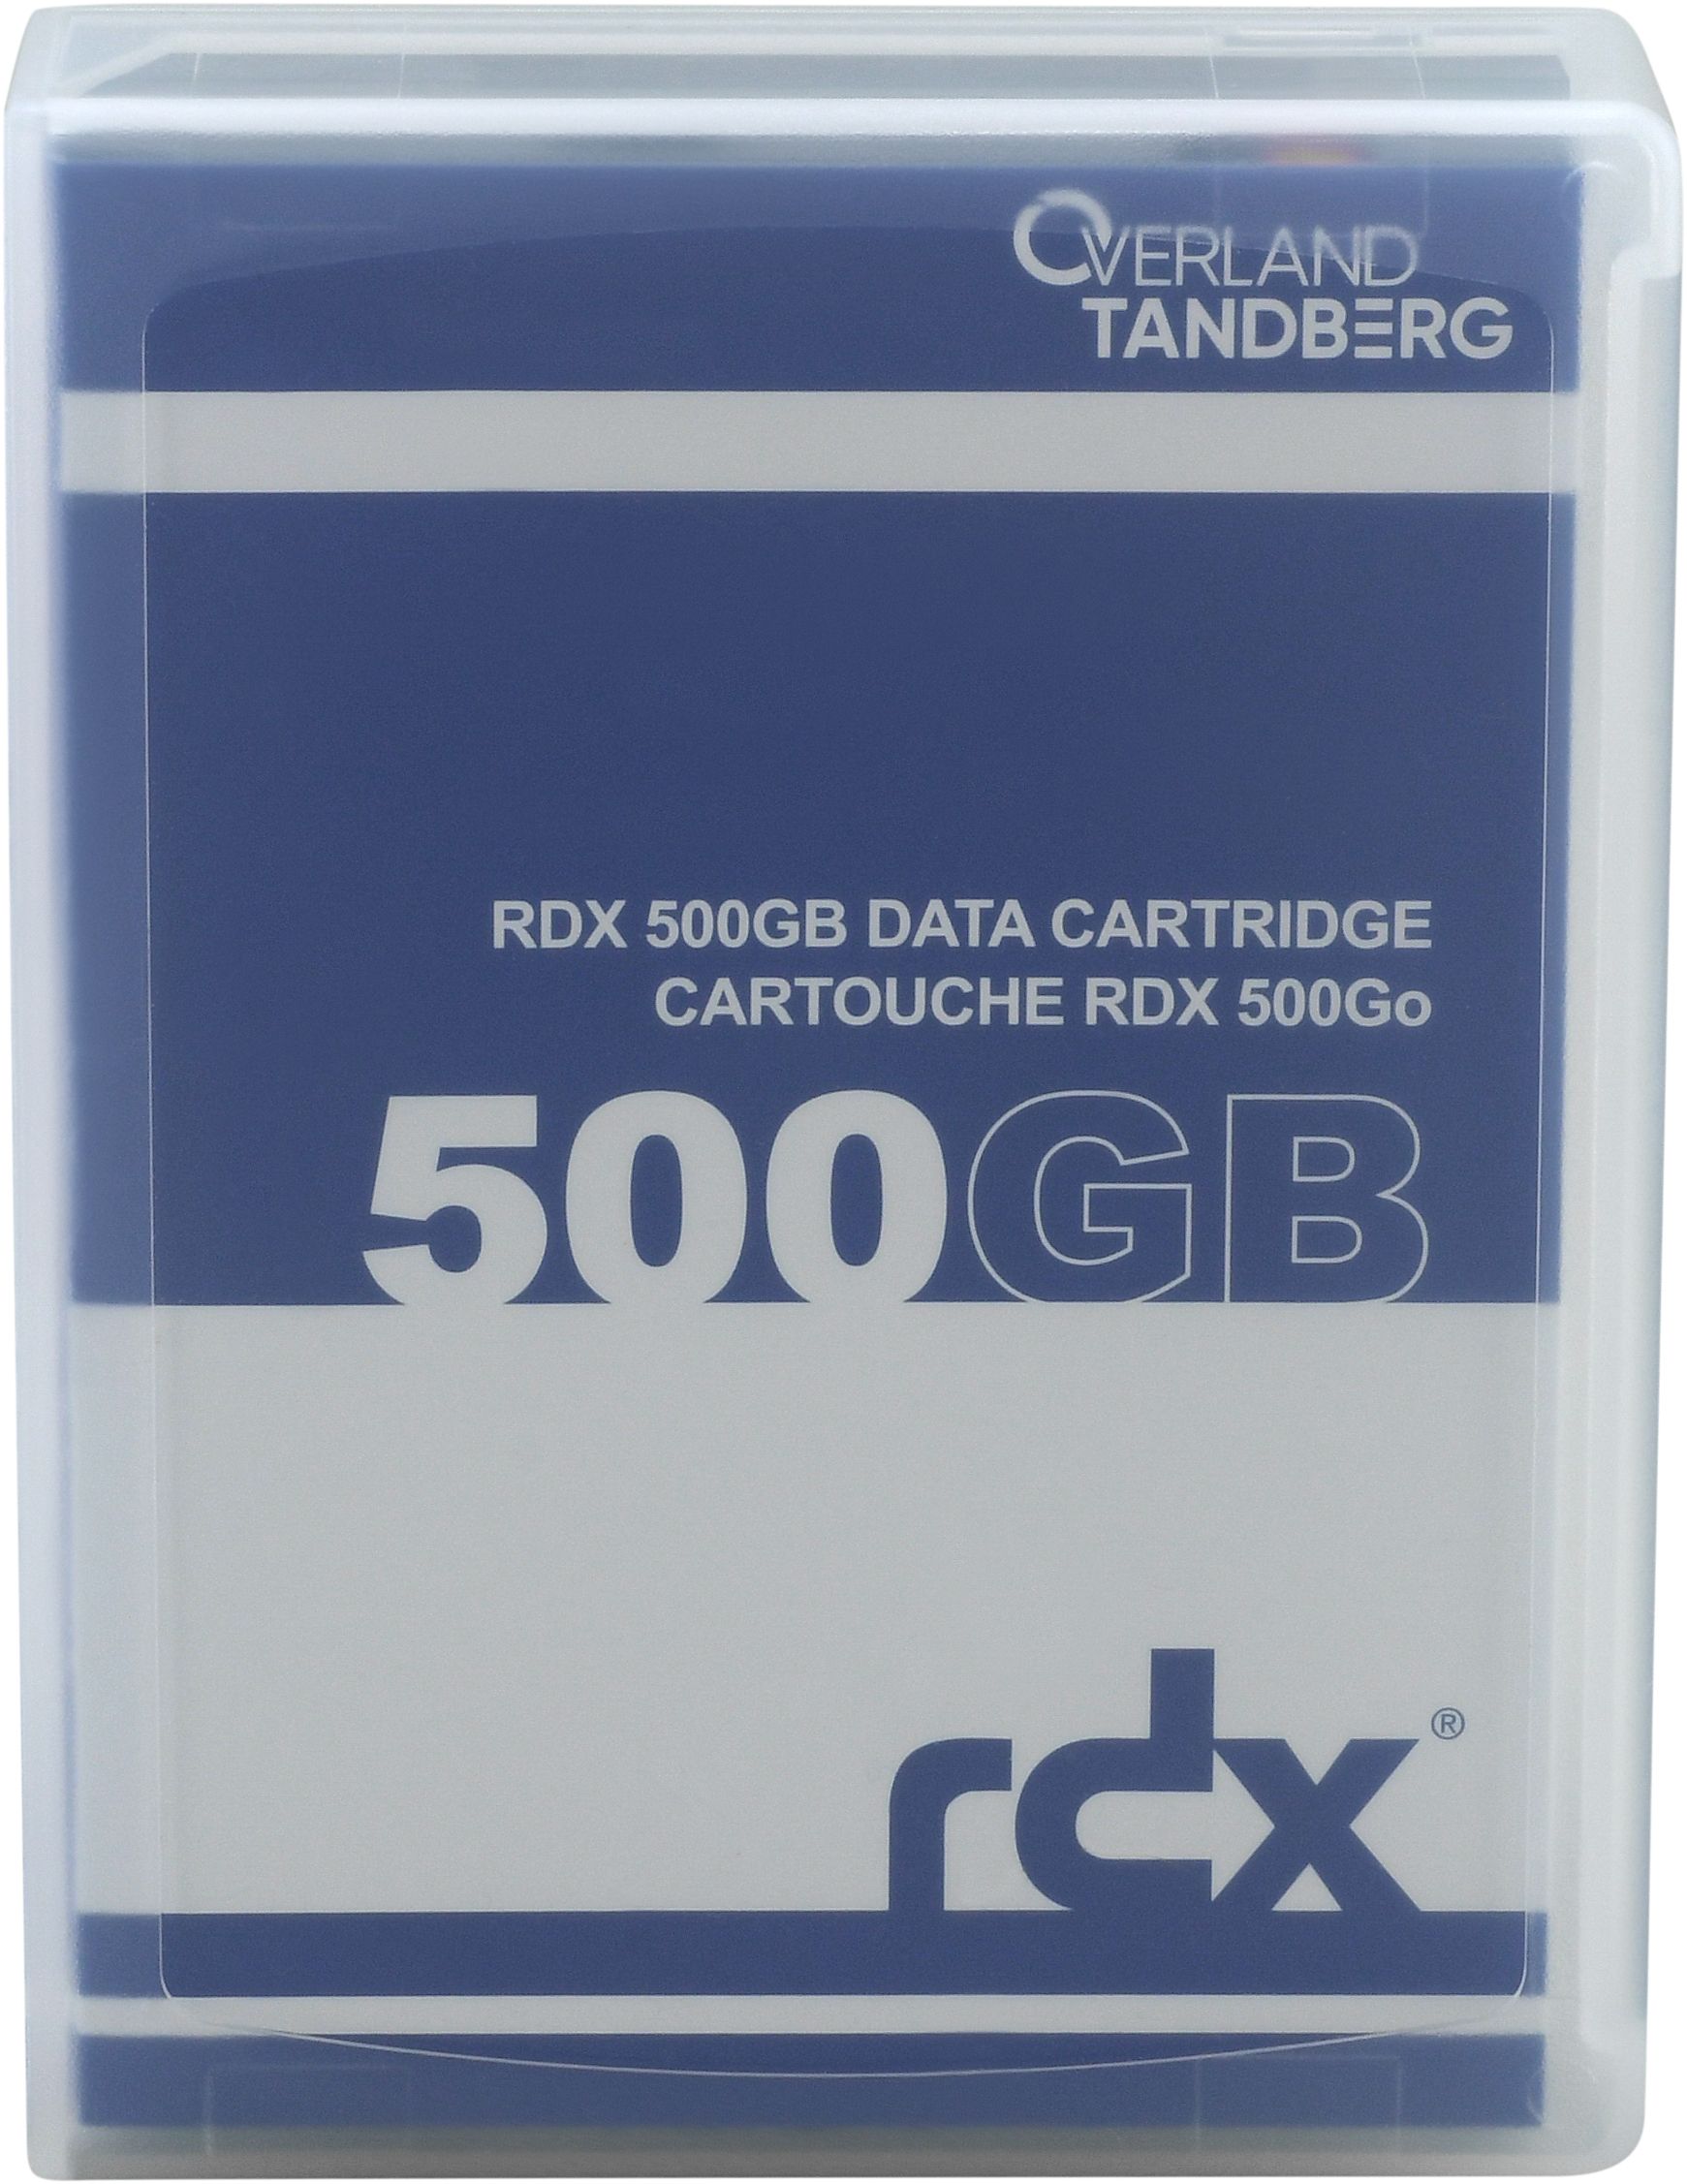 Cartridge Tandberg RDX 500GB_4